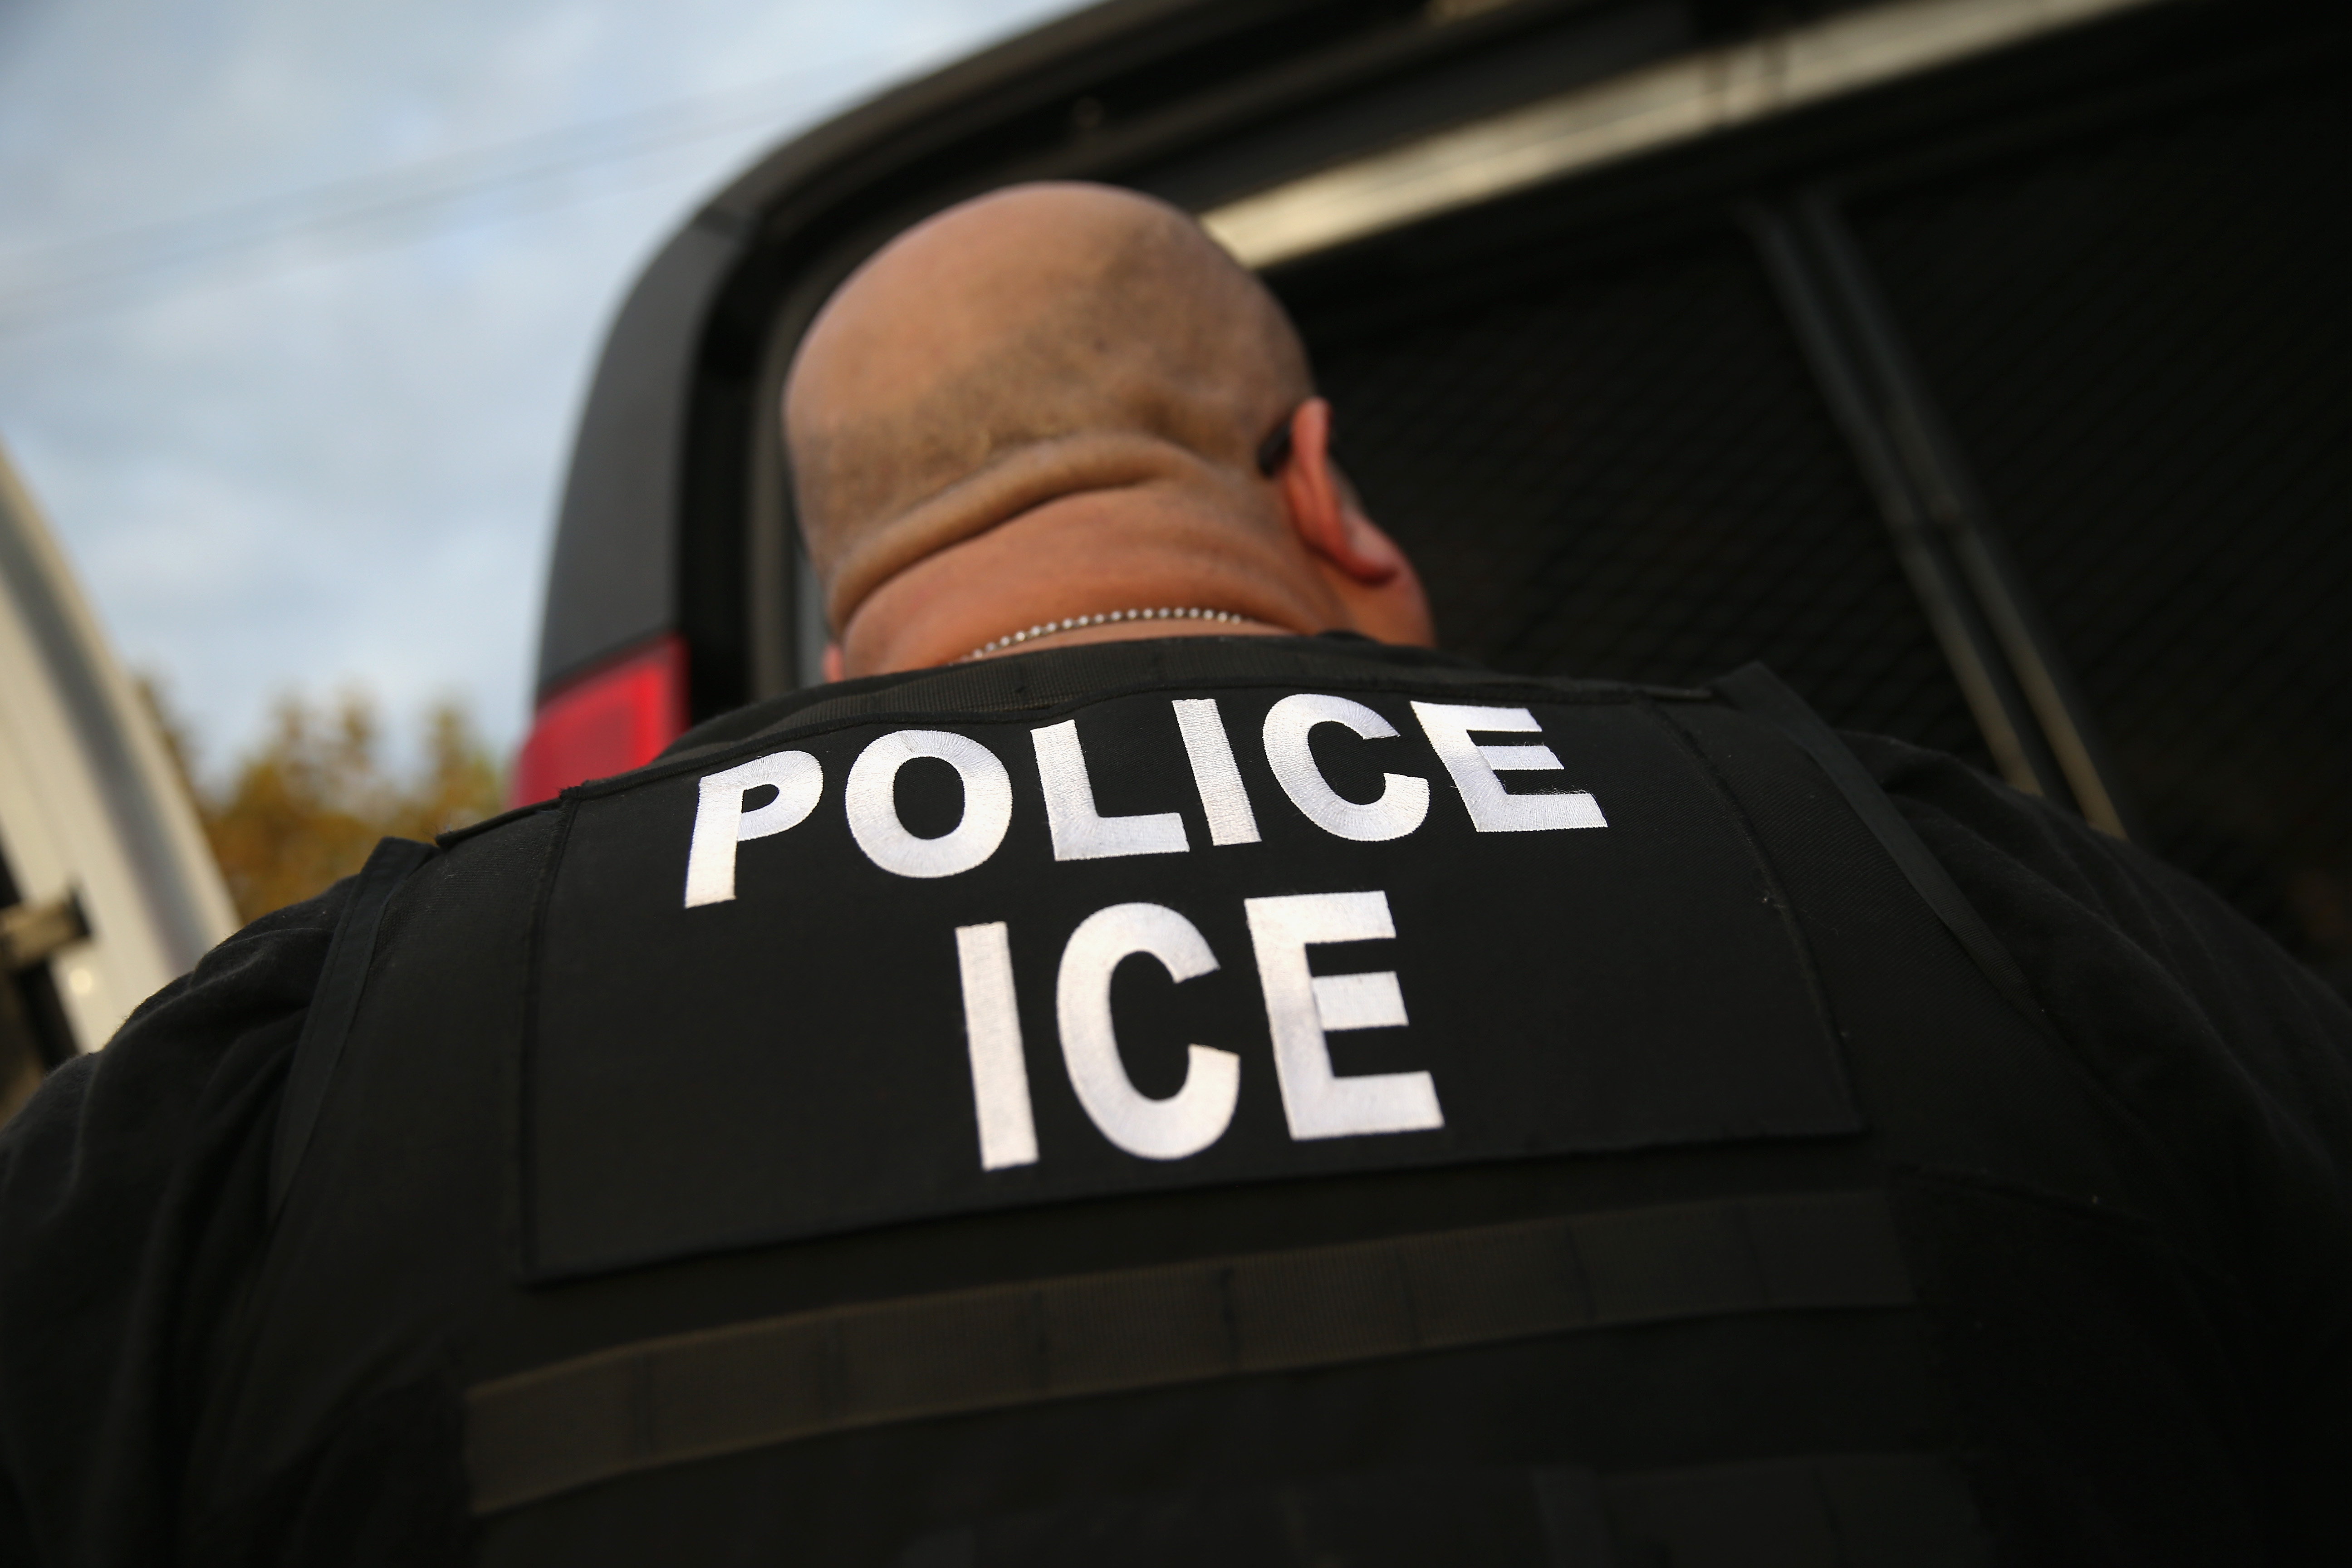 ICE Agents Detain Suspected Undocumented Immigrants In Raids